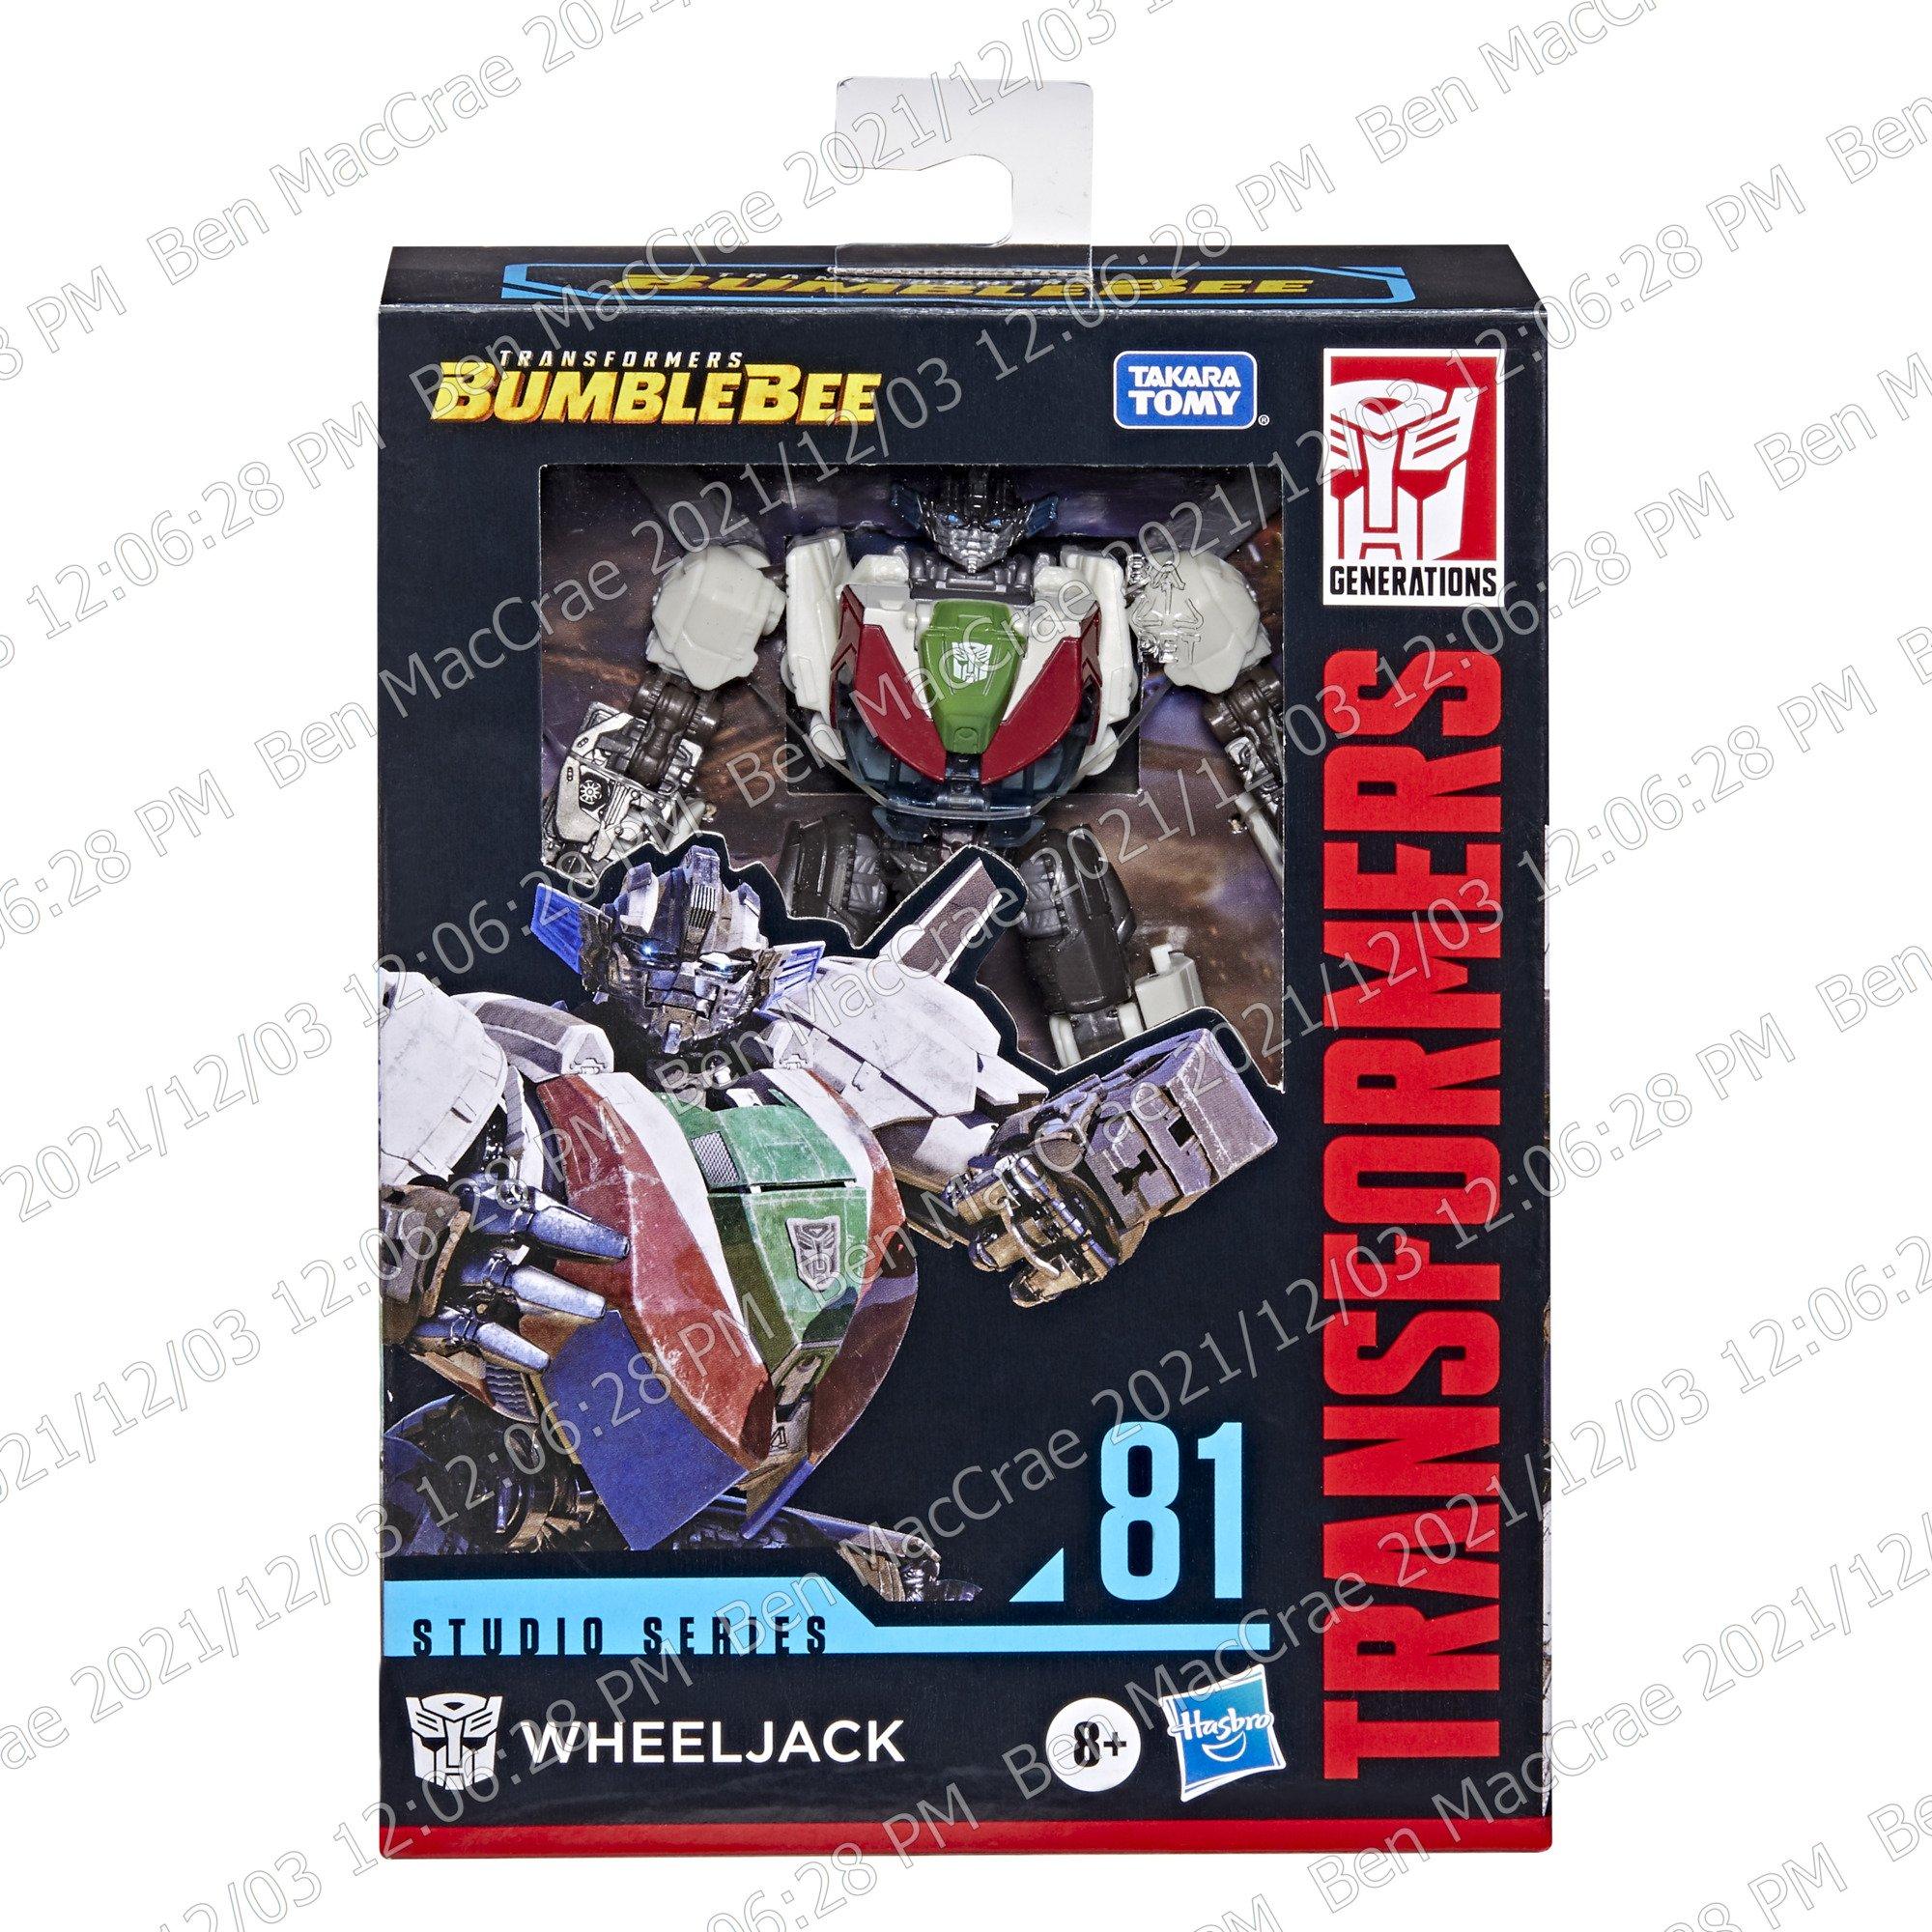 list item 8 of 9 Hasbro Transformers BumbleBee Studio Series Wheeljack 4.5-in Action Figure